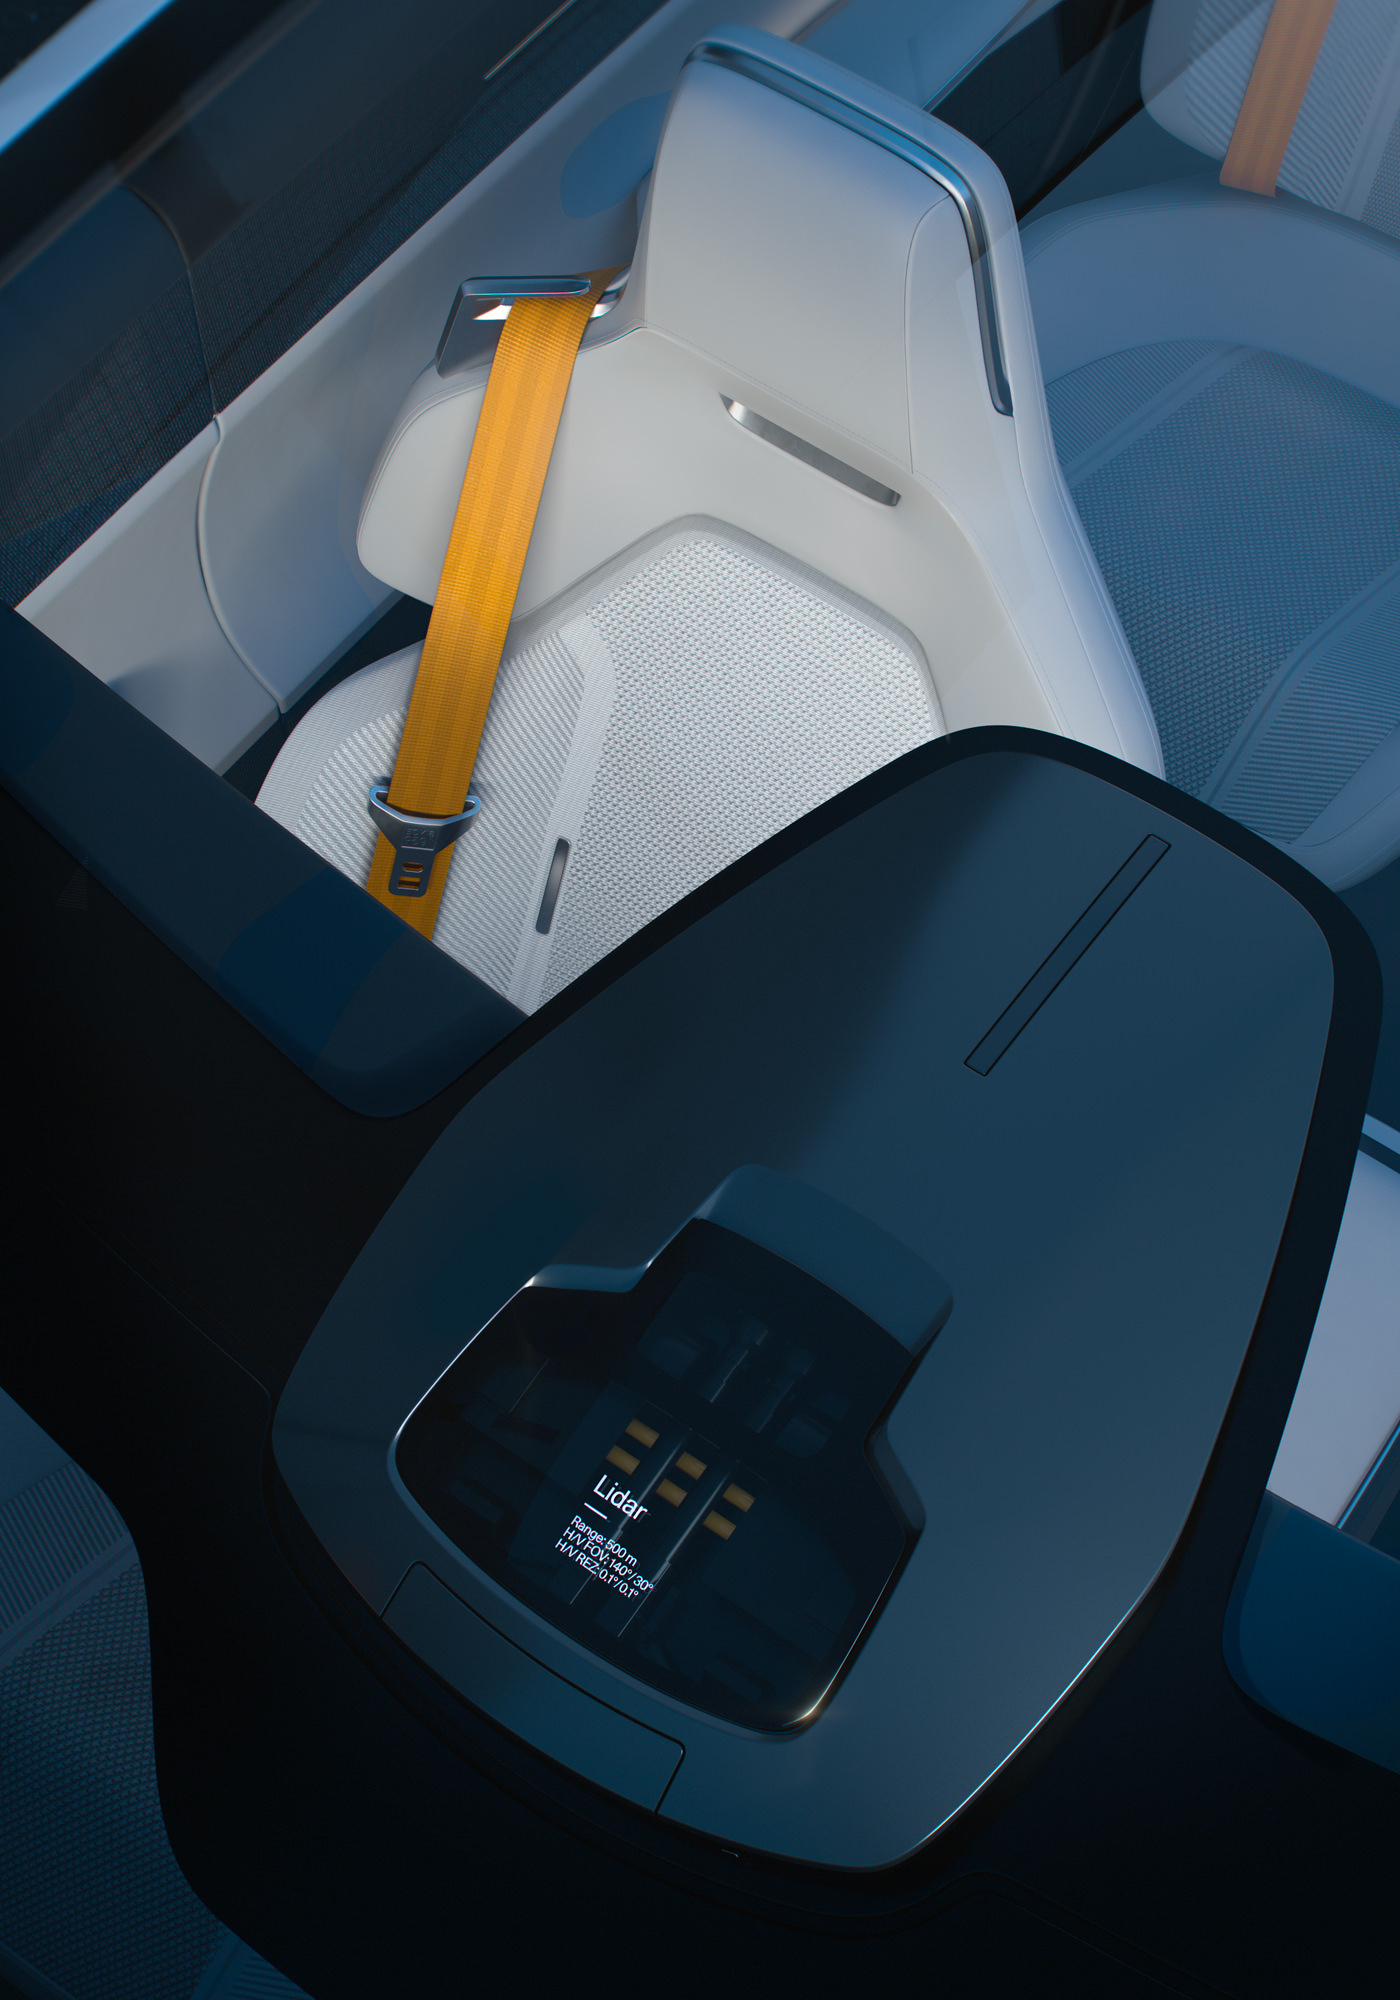 Polestar Precept Concept-Car Electrique Volvo